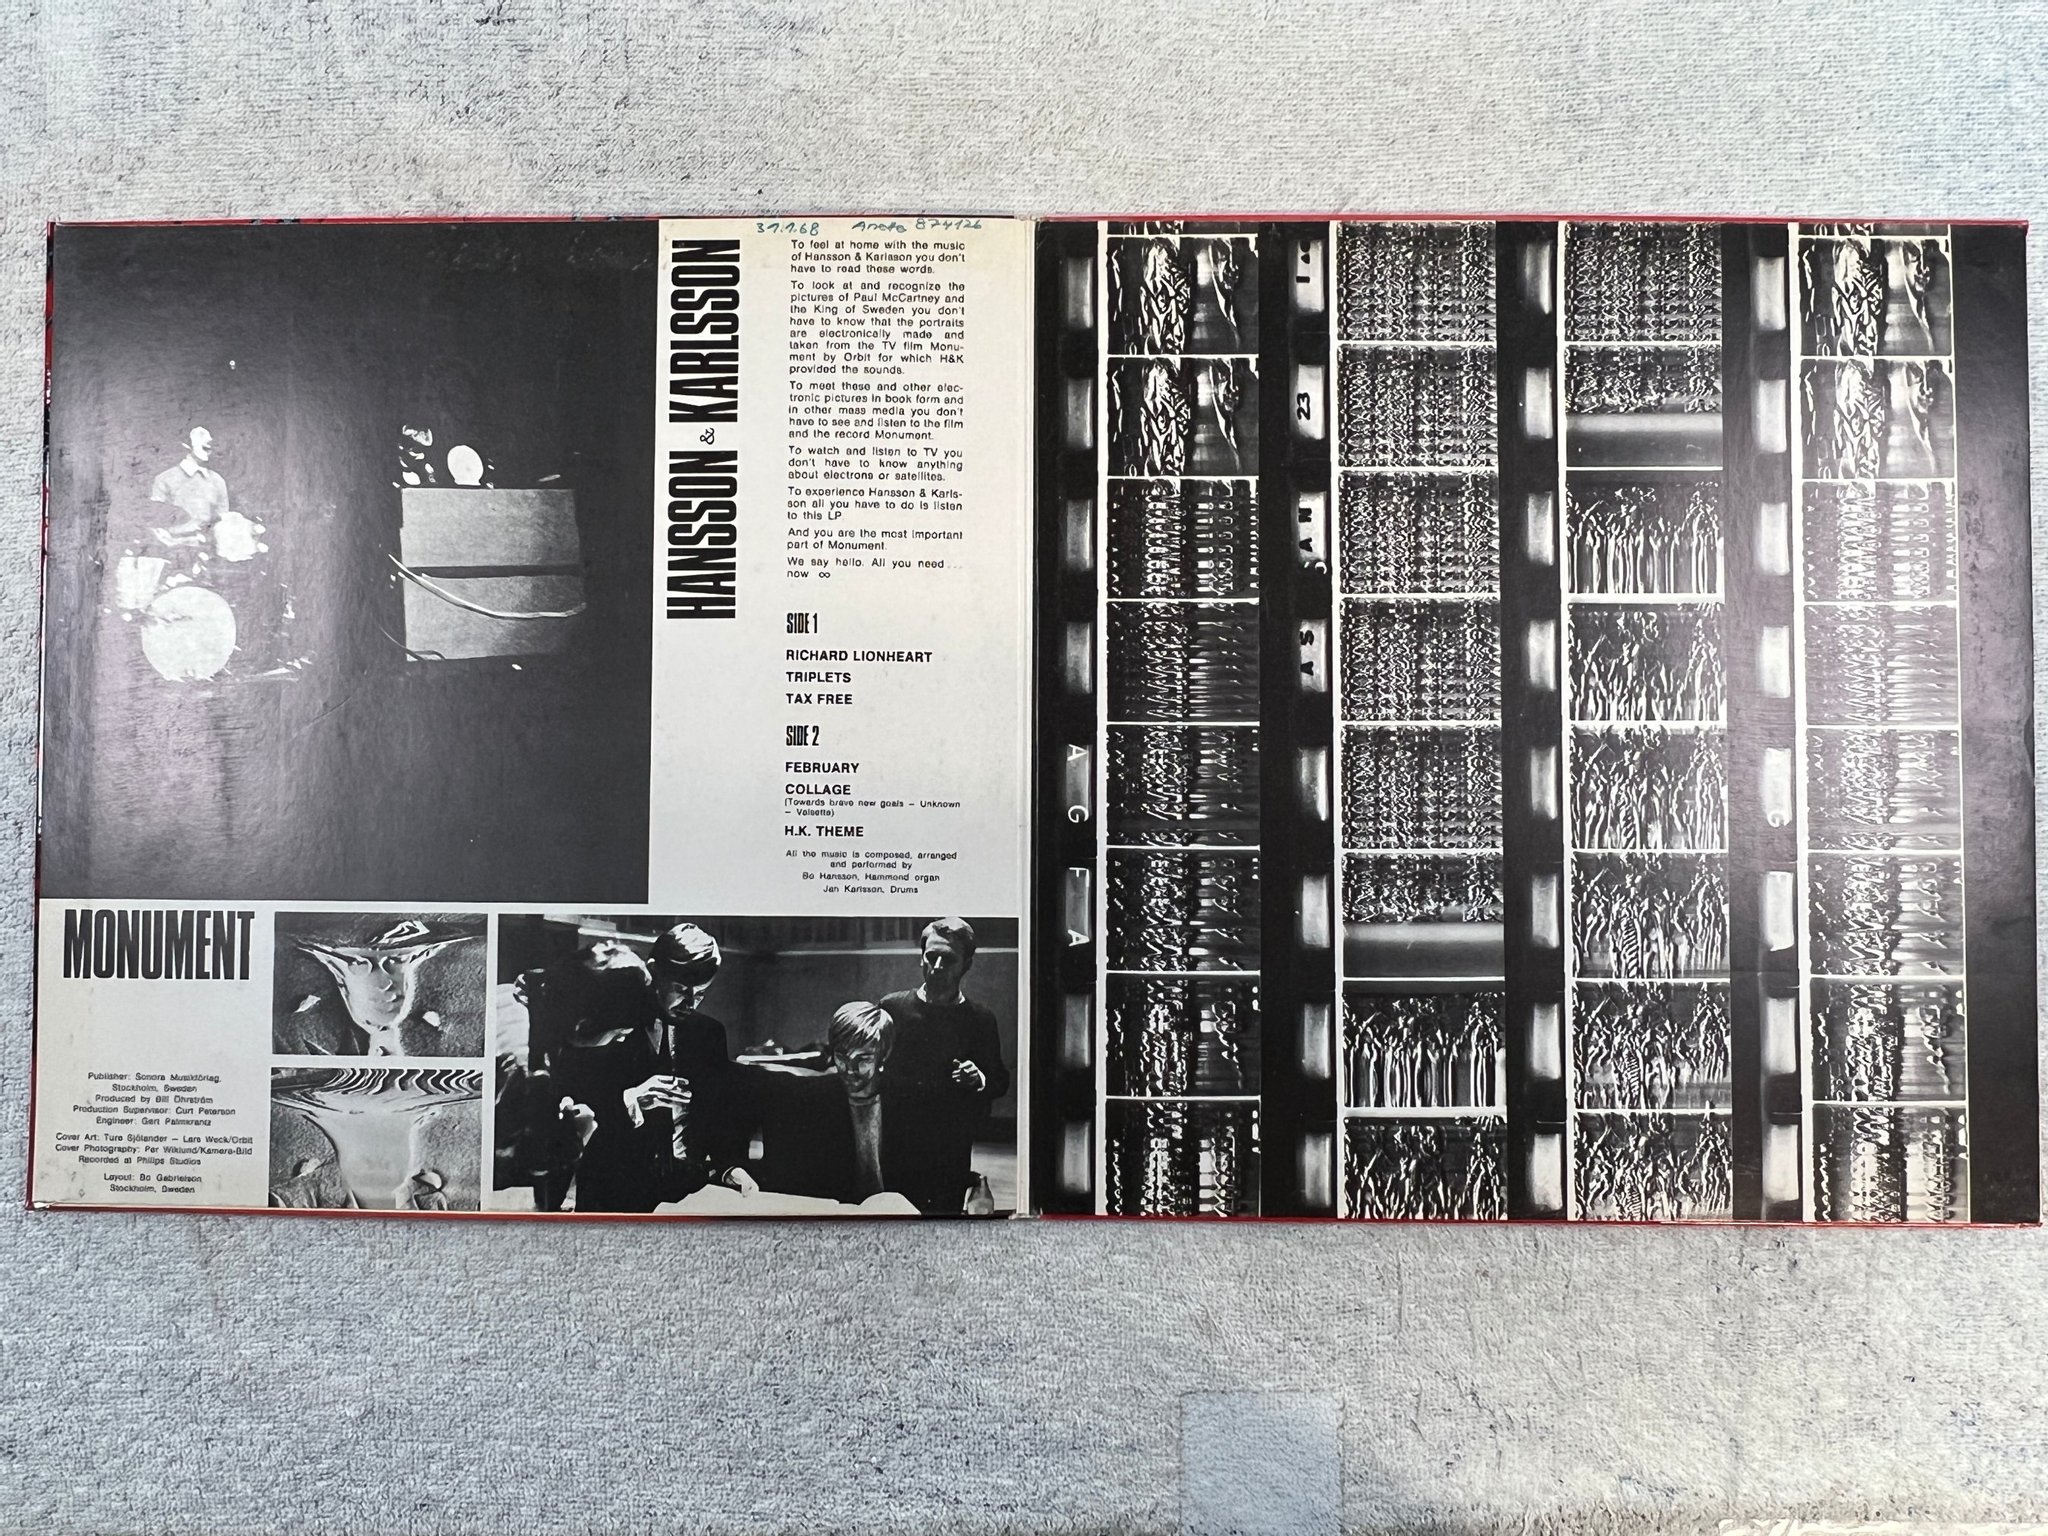 Omslagsbild för skivan HANSSON & KARLSSON monument LP -67 swe  POLYDOR 46260 ST ** classic **